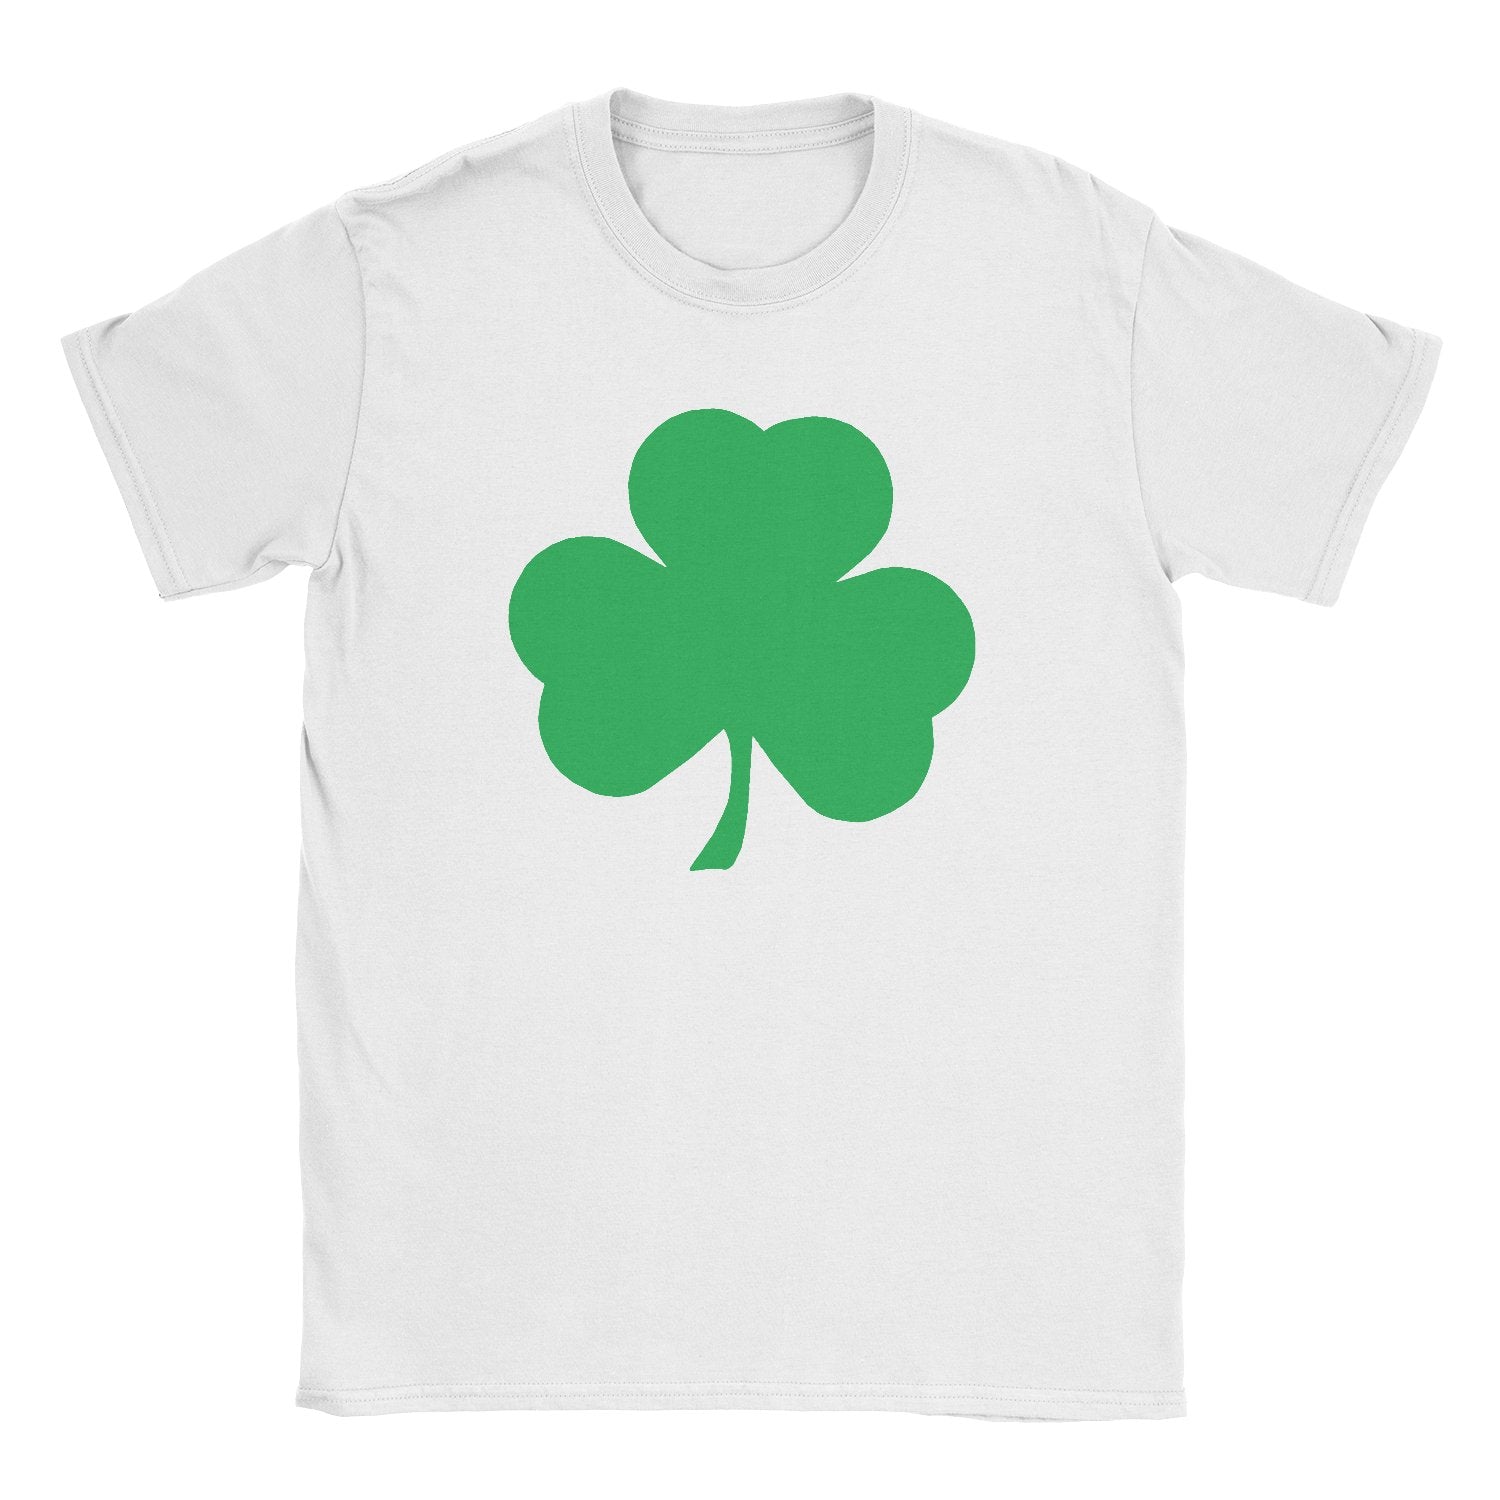 T-shirt pour enfants Shamrock (grand design solide, blanc et vert)